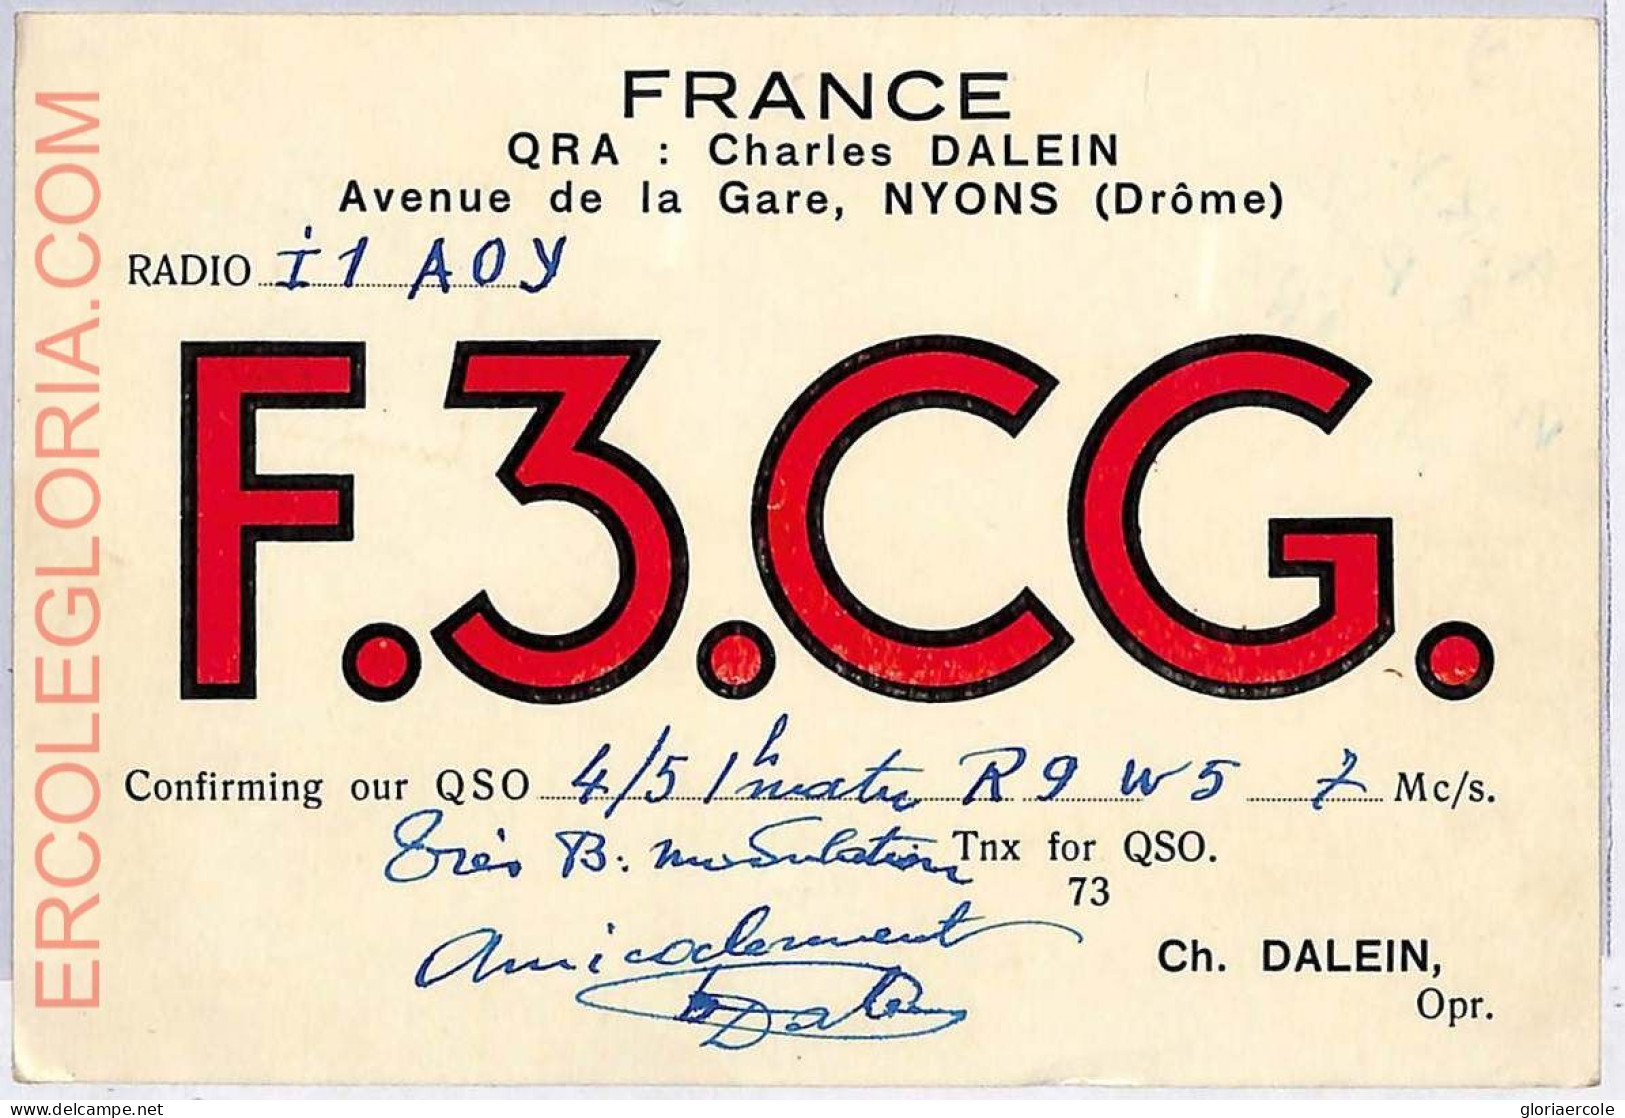 Ad9054 - FRANCE - RADIO FREQUENCY CARD   - 1950's - Radio